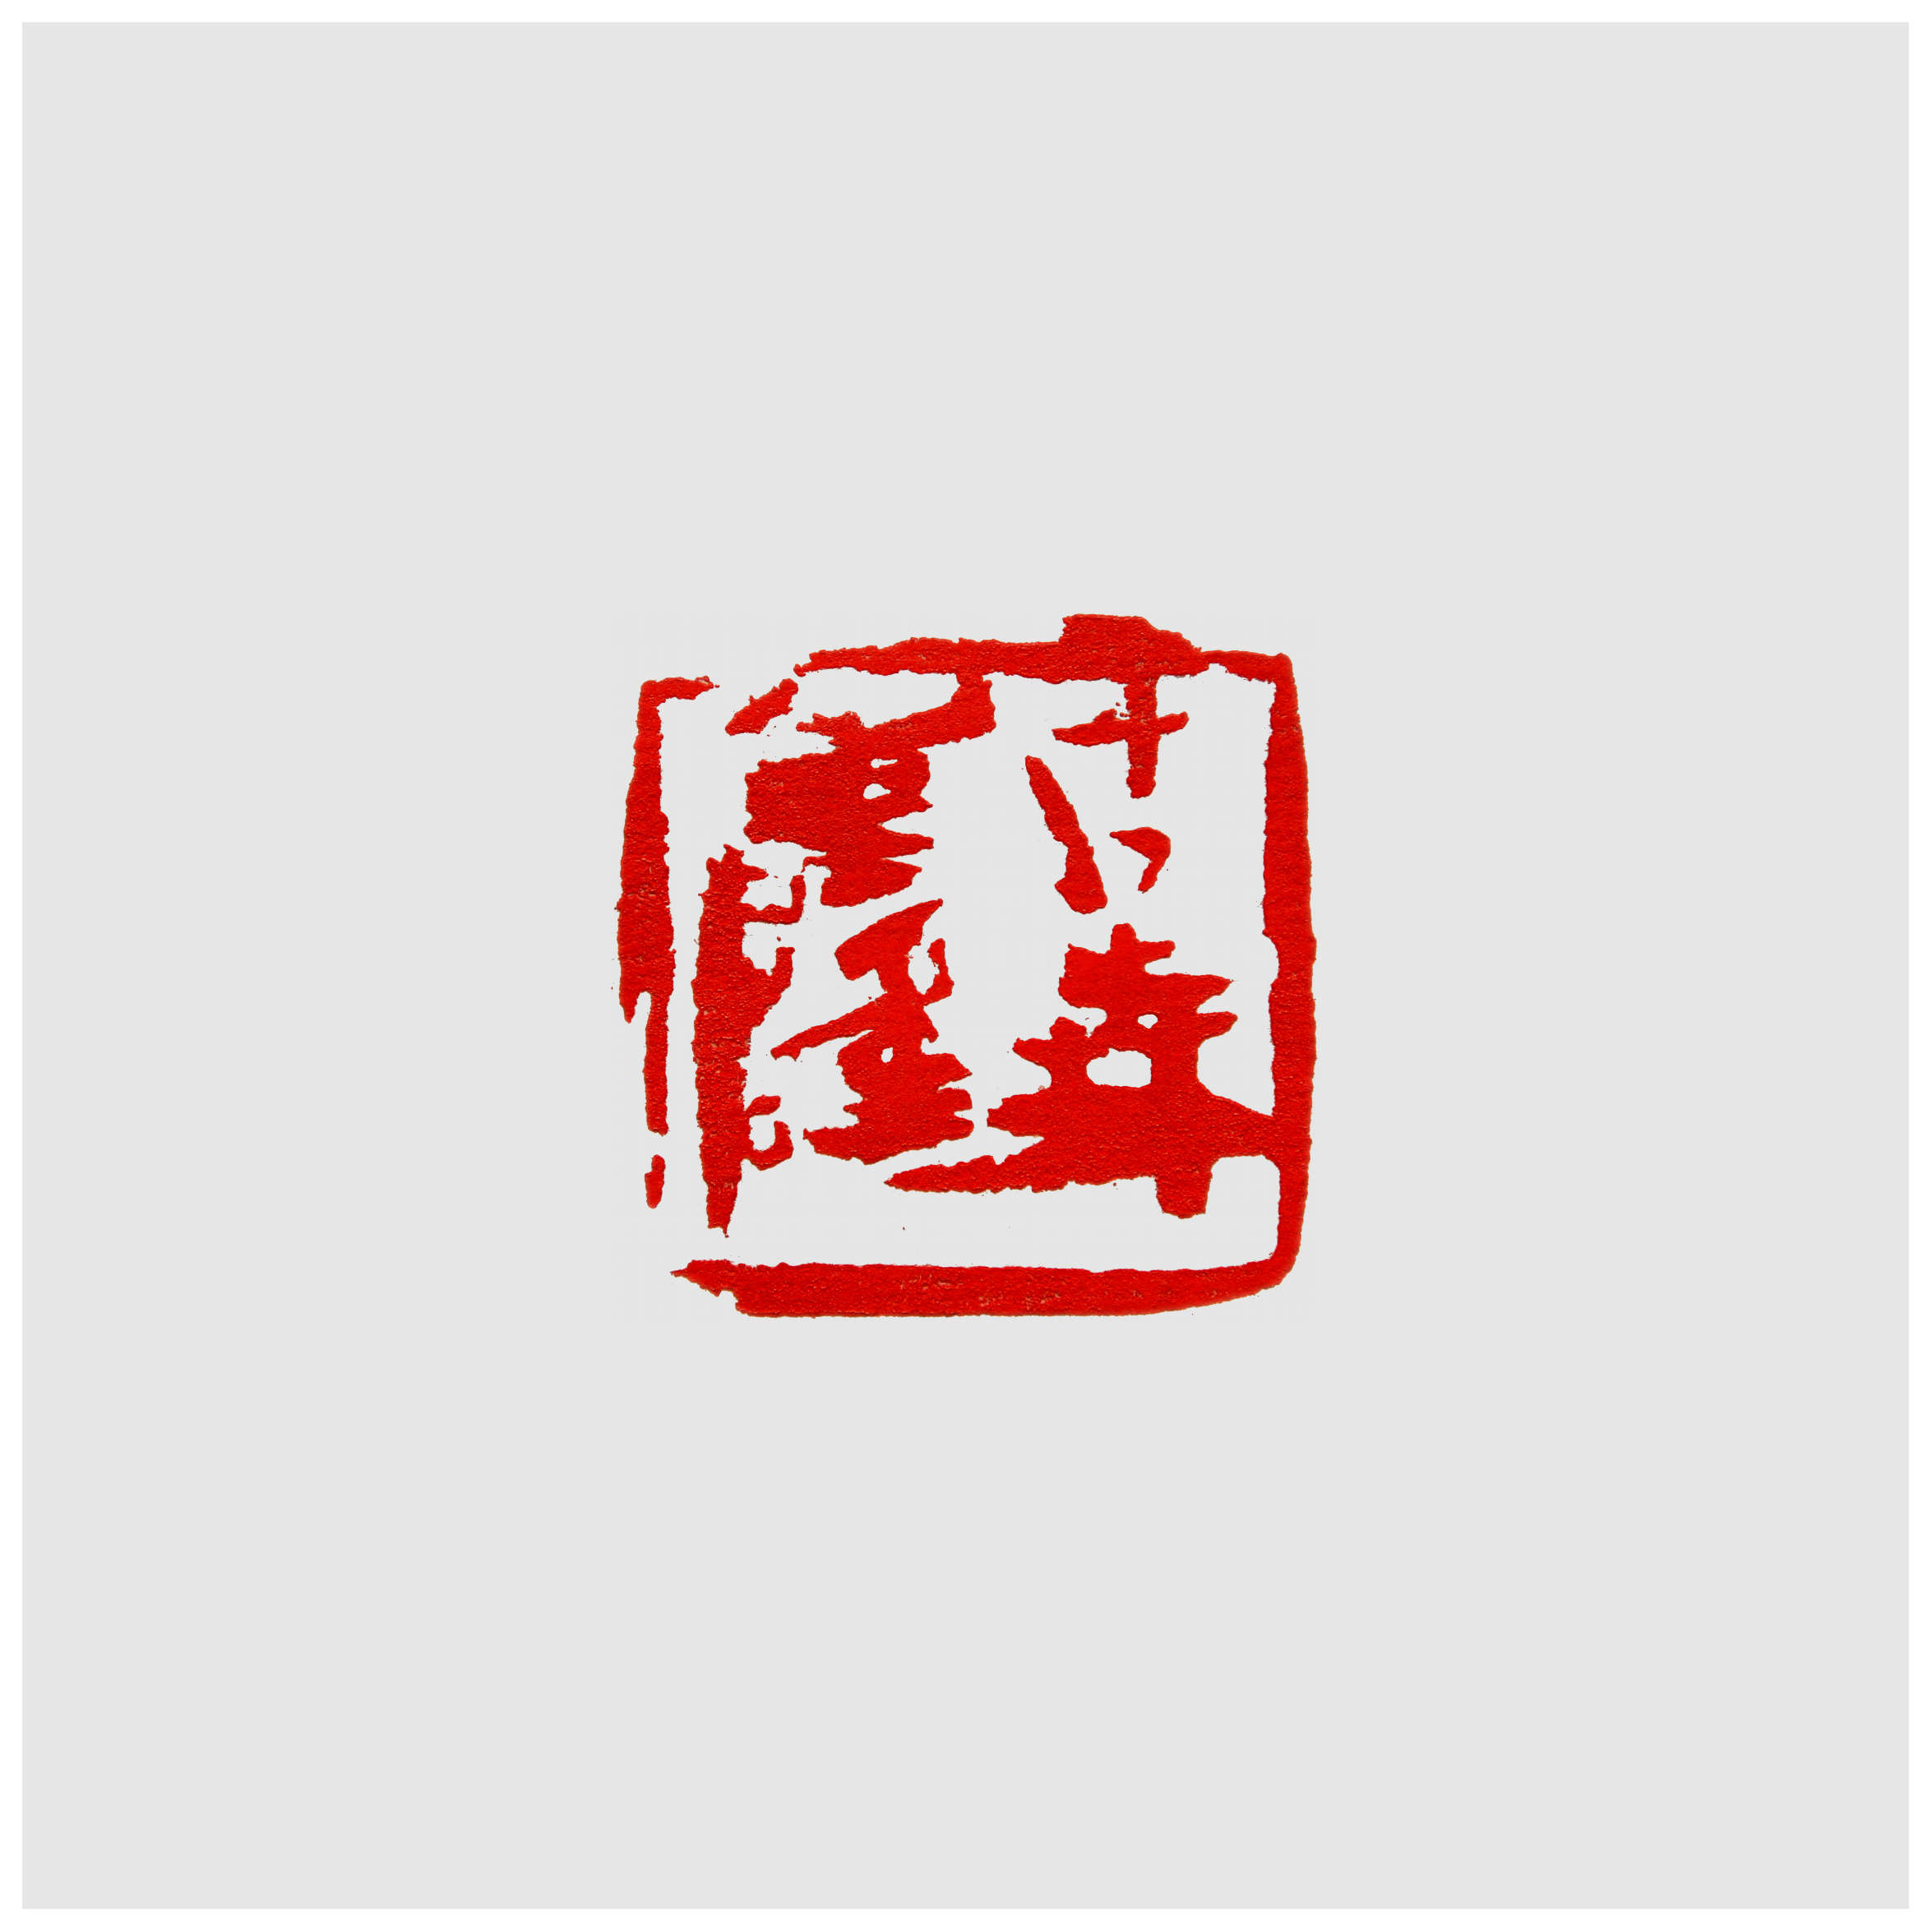 Qi Hong (Sai Koh) 's freehand brushwork style semi-seal script name seal carving (aka Chinese seal engraving, seal cutting) imprint: Shigetaka KOMORI, 40×40mm, stone